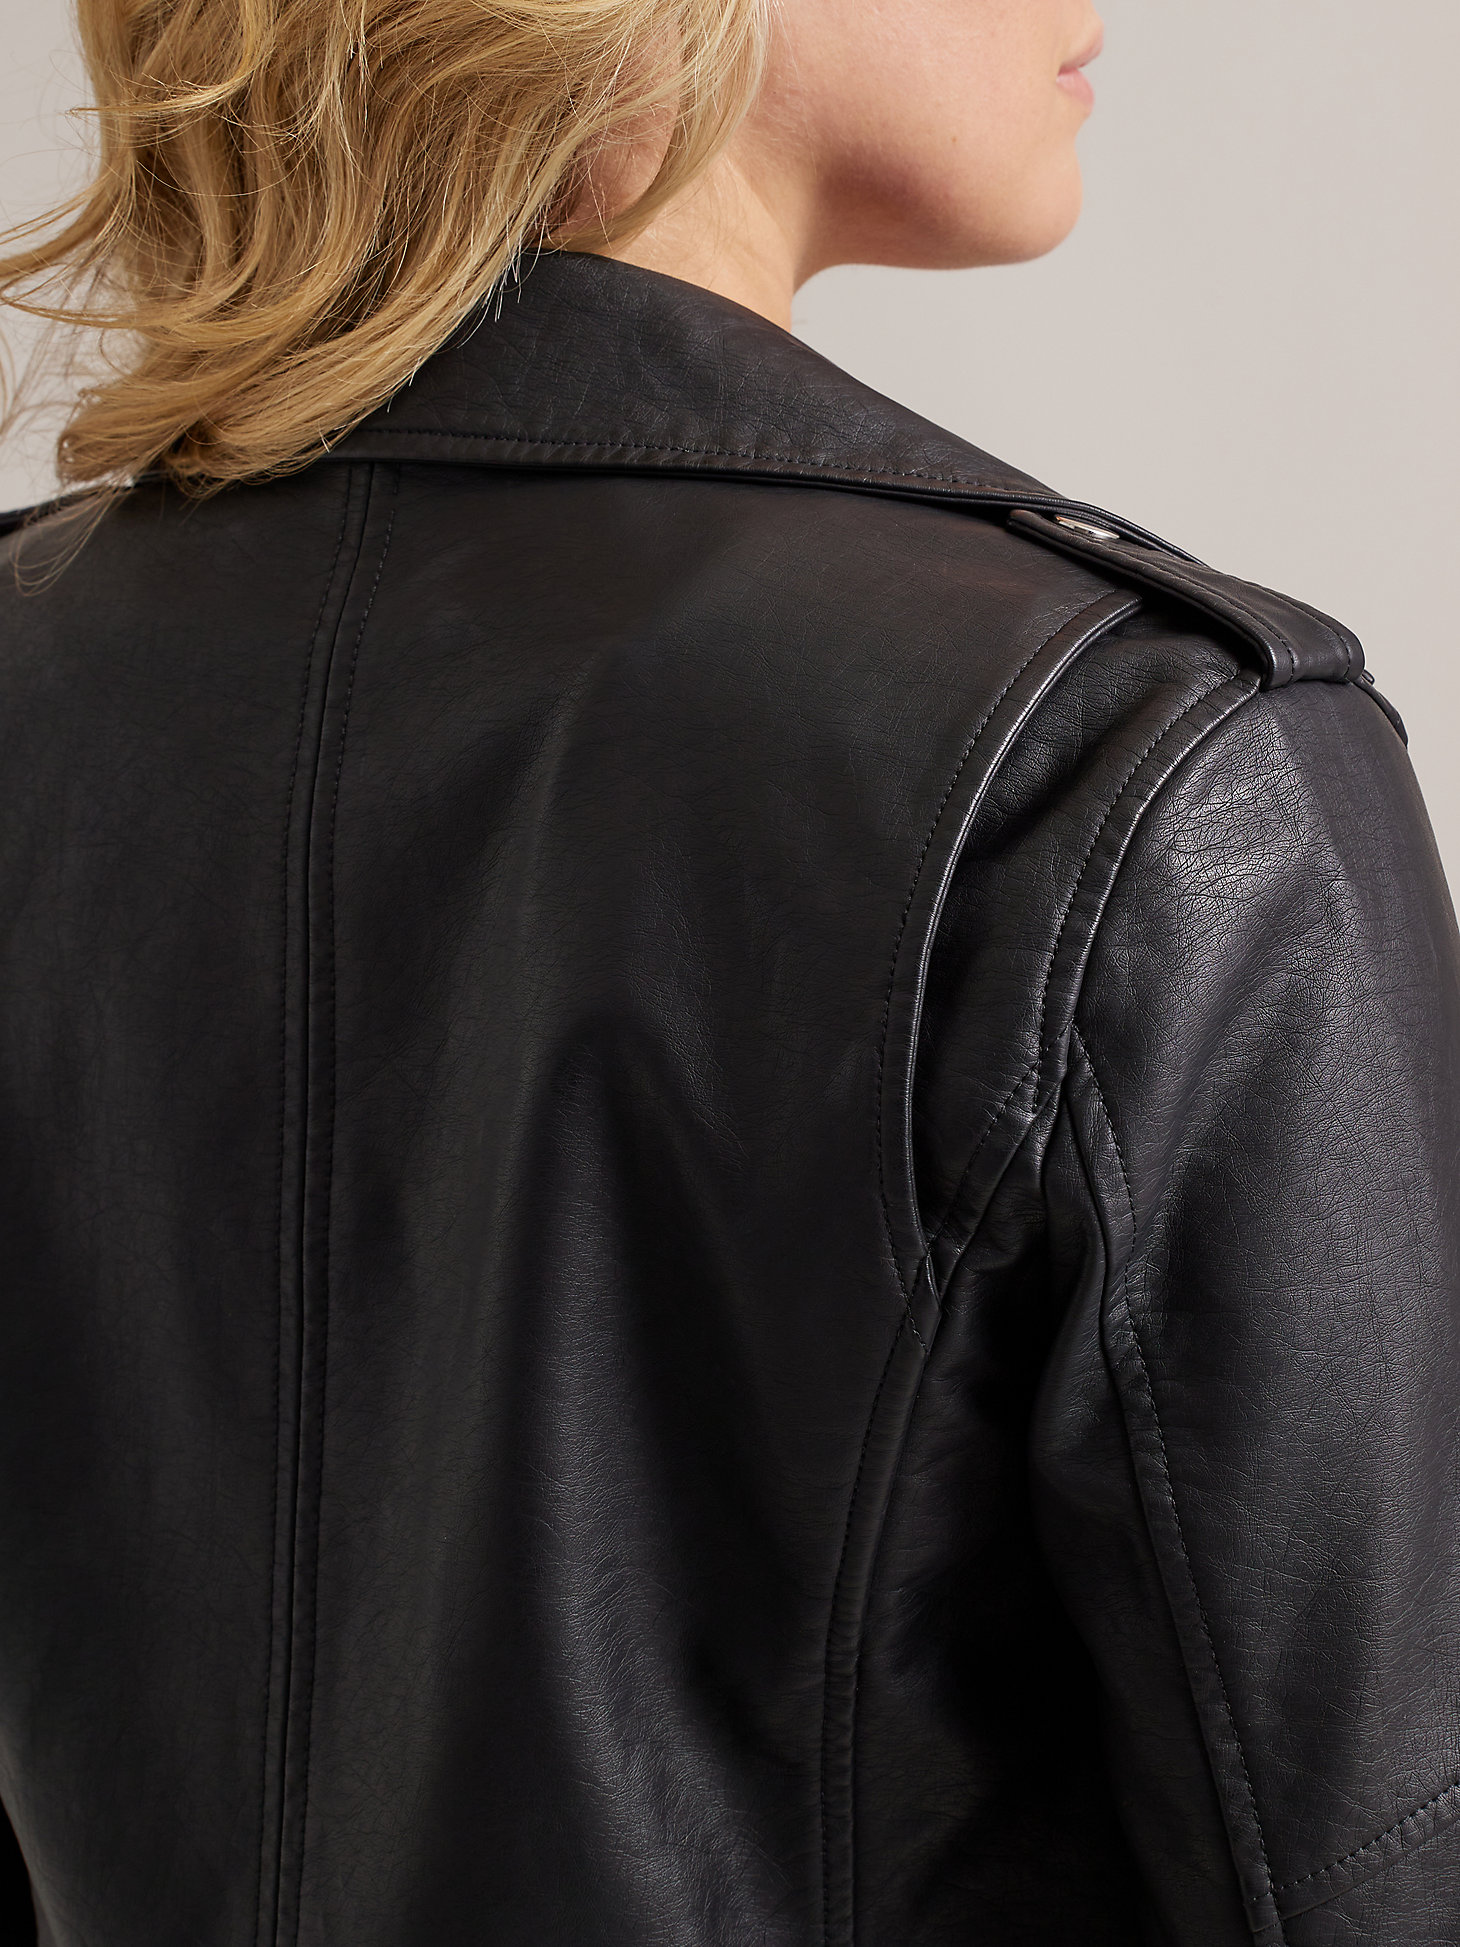 Women's Vegan Leather Jacket in Black alternative view 6